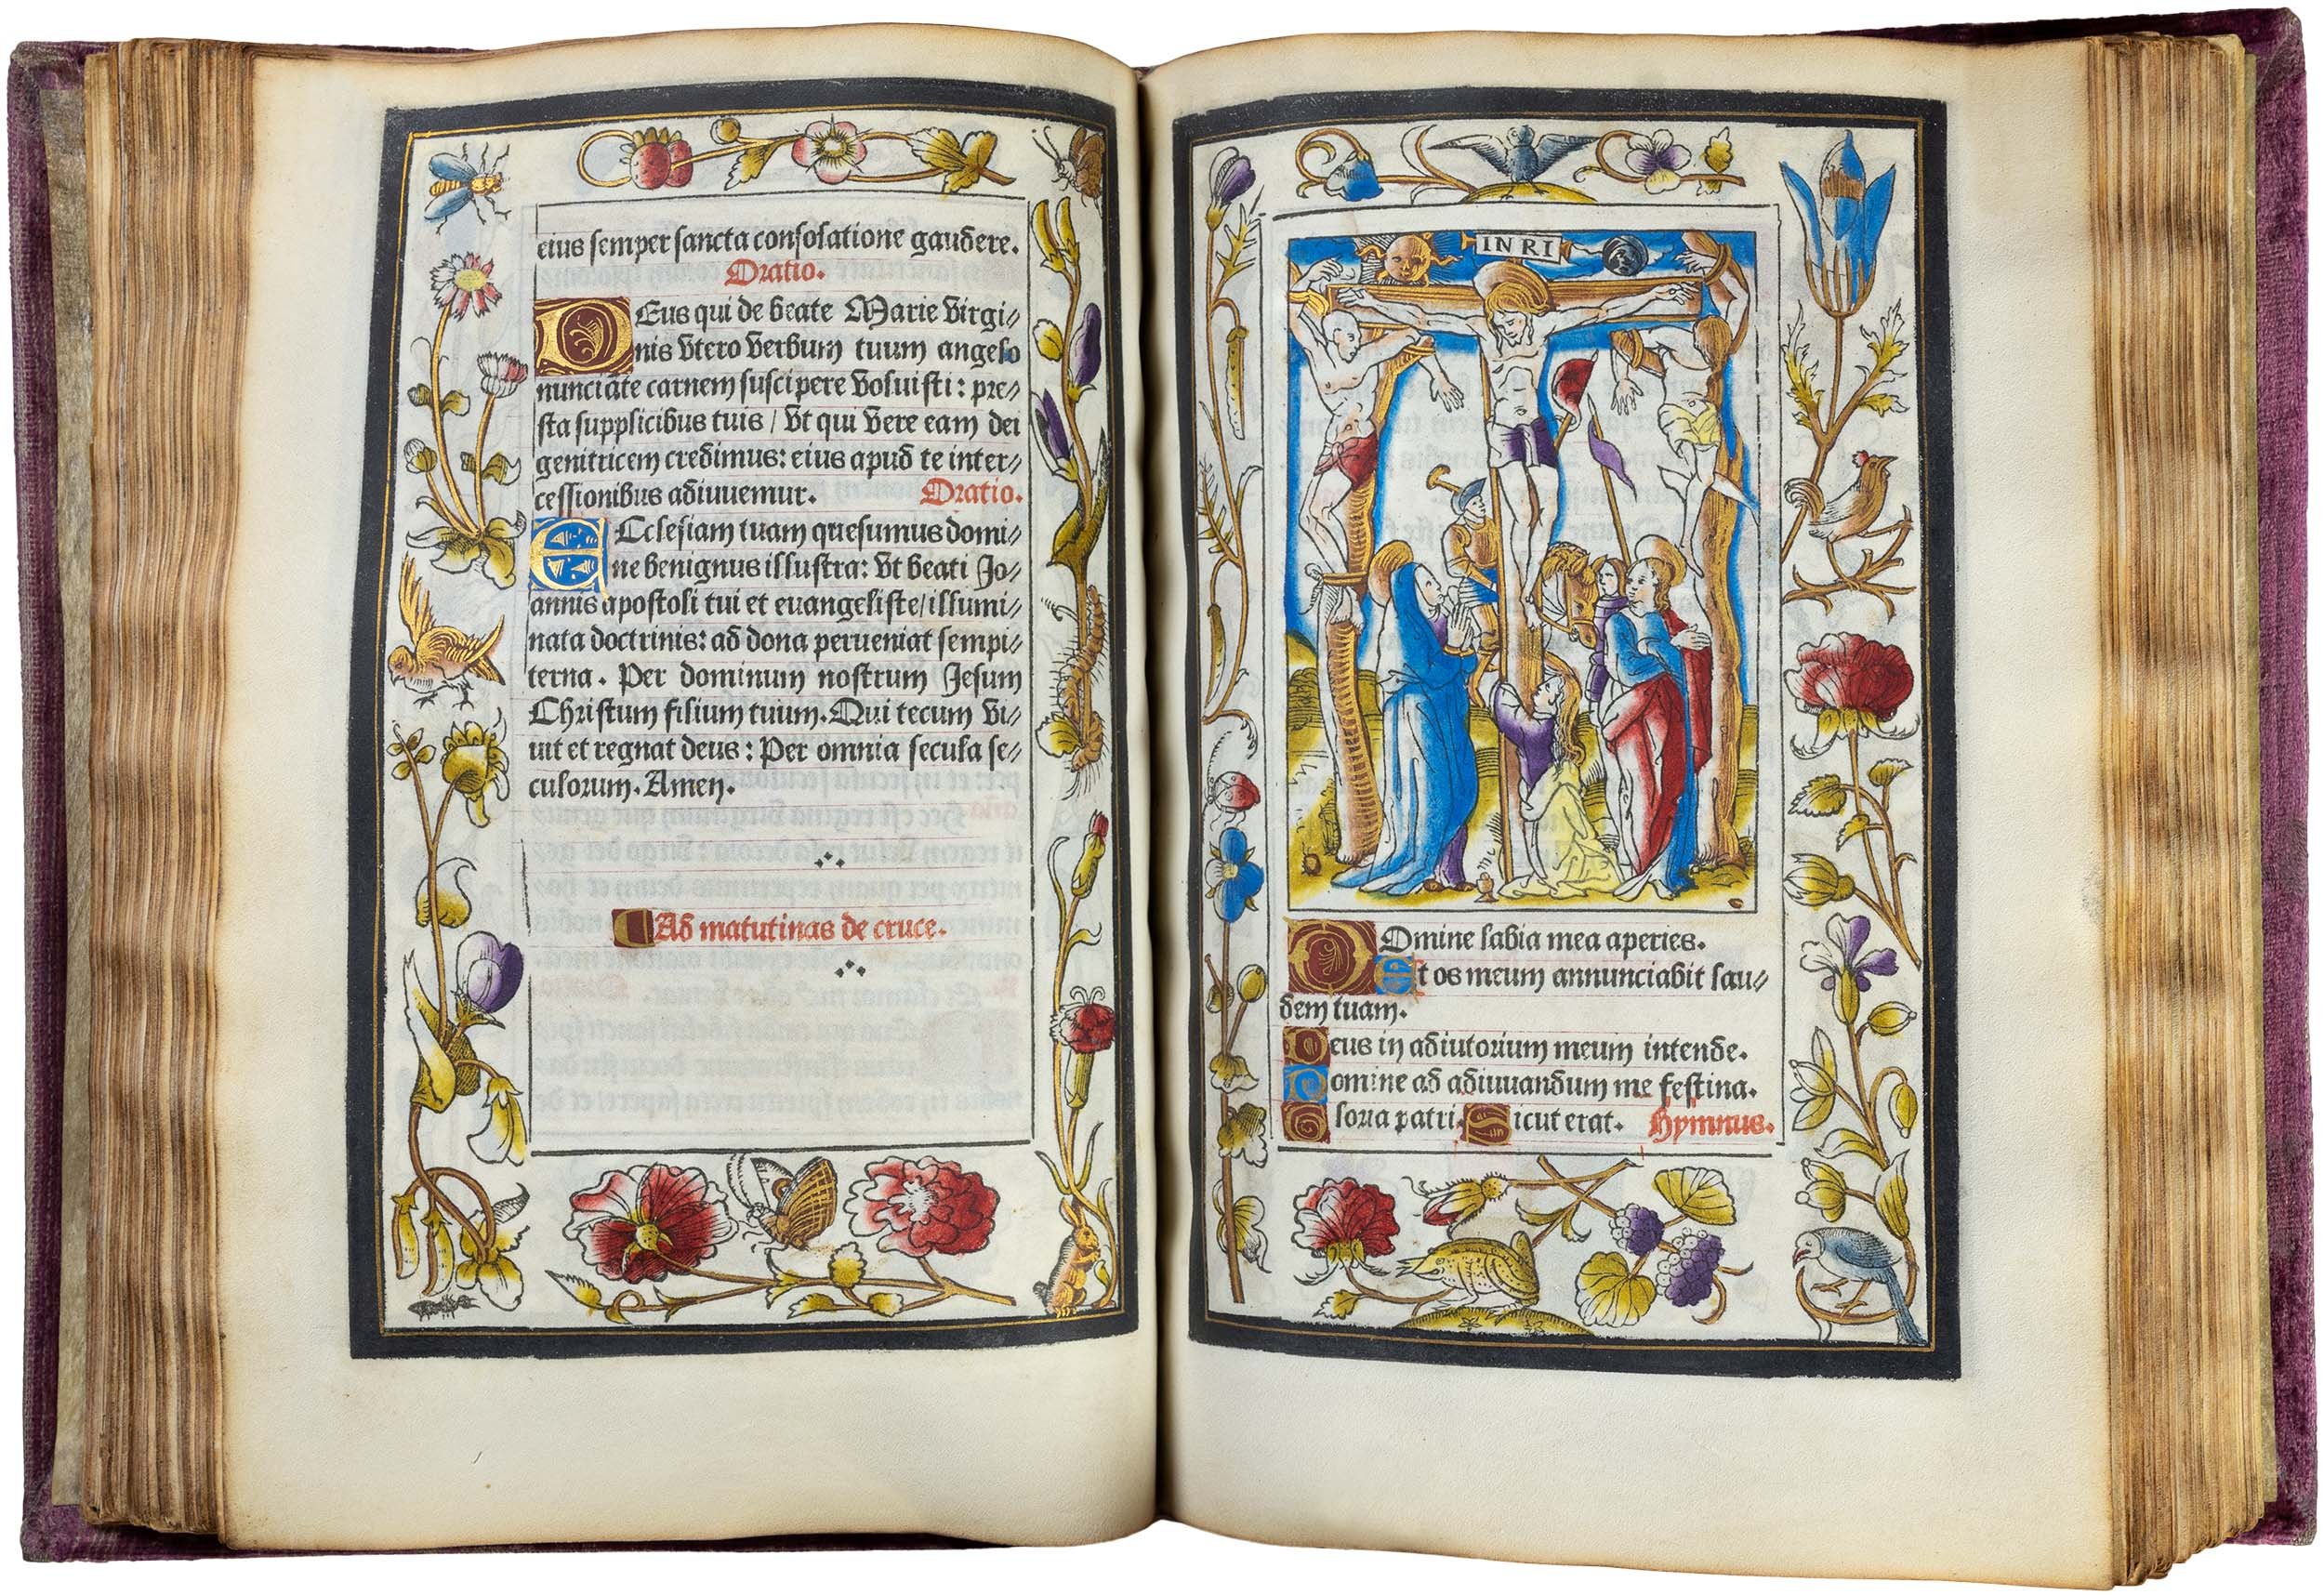 geoffroy-tory-printed-book-of-hours-illuminated-vellum-22-october-1527-prince-dessing-villeneuve-horae-bmv-64.jpg